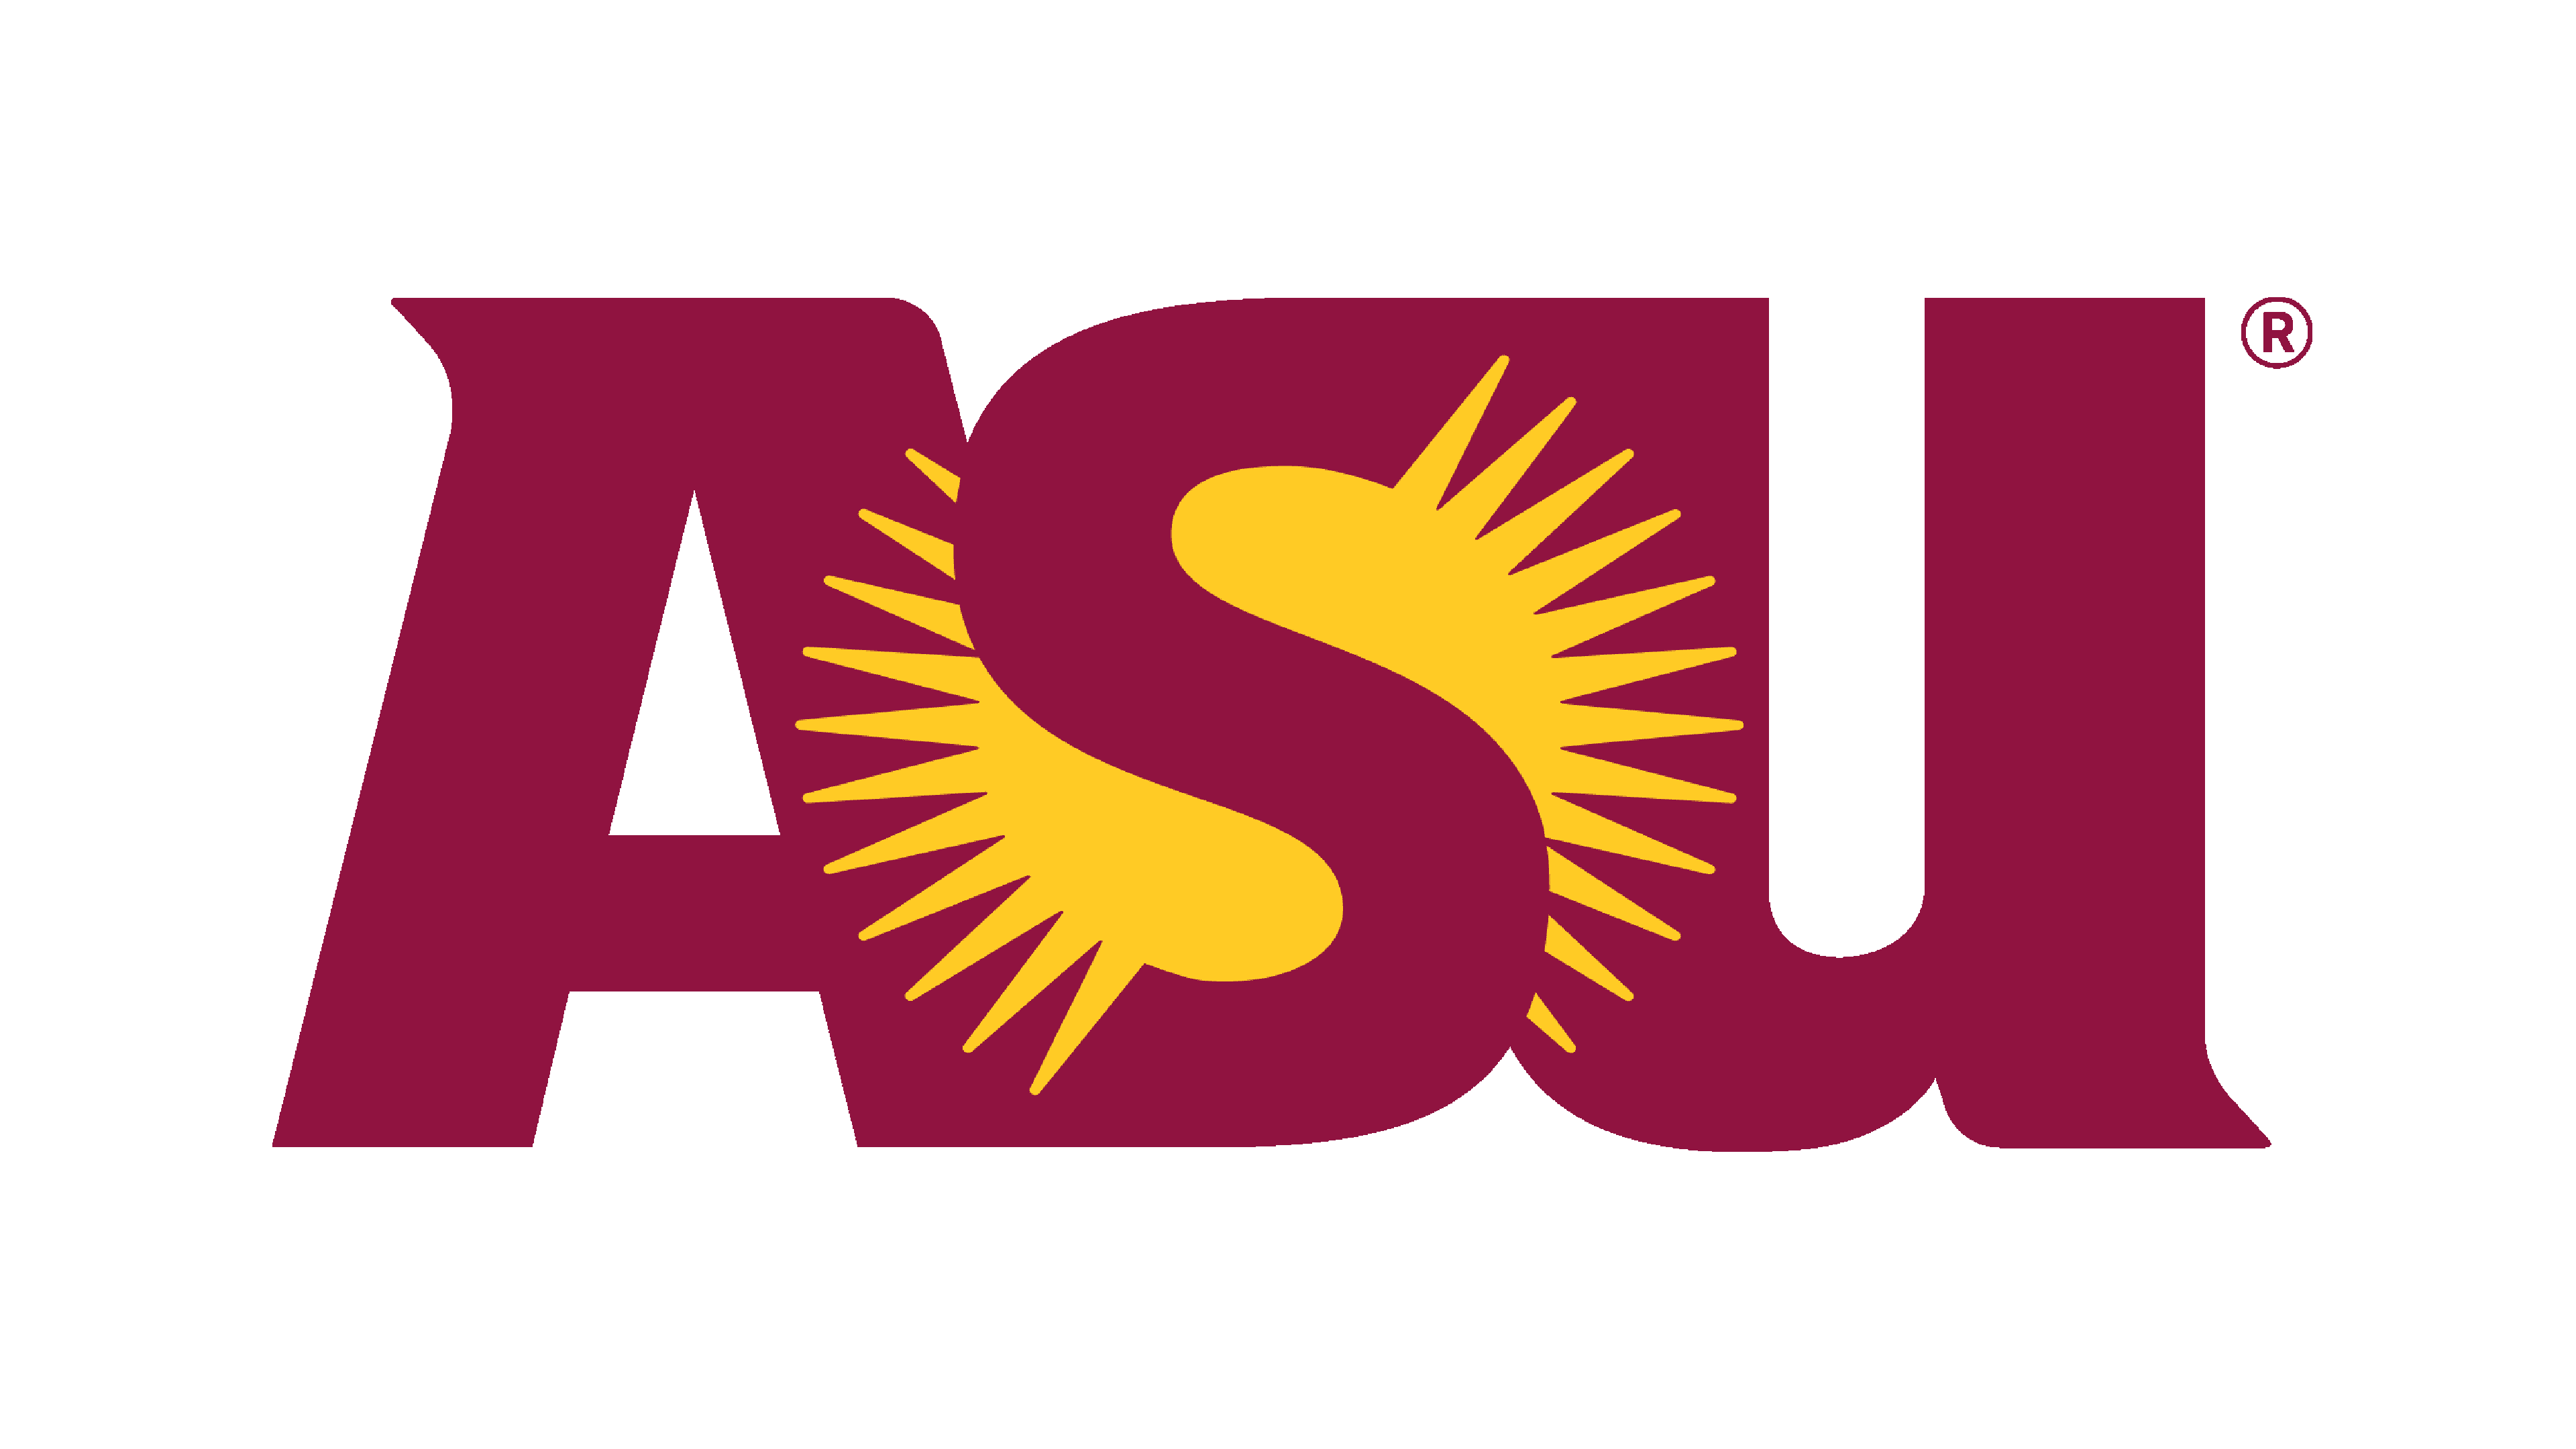 Arizona State University JOC2 logo.